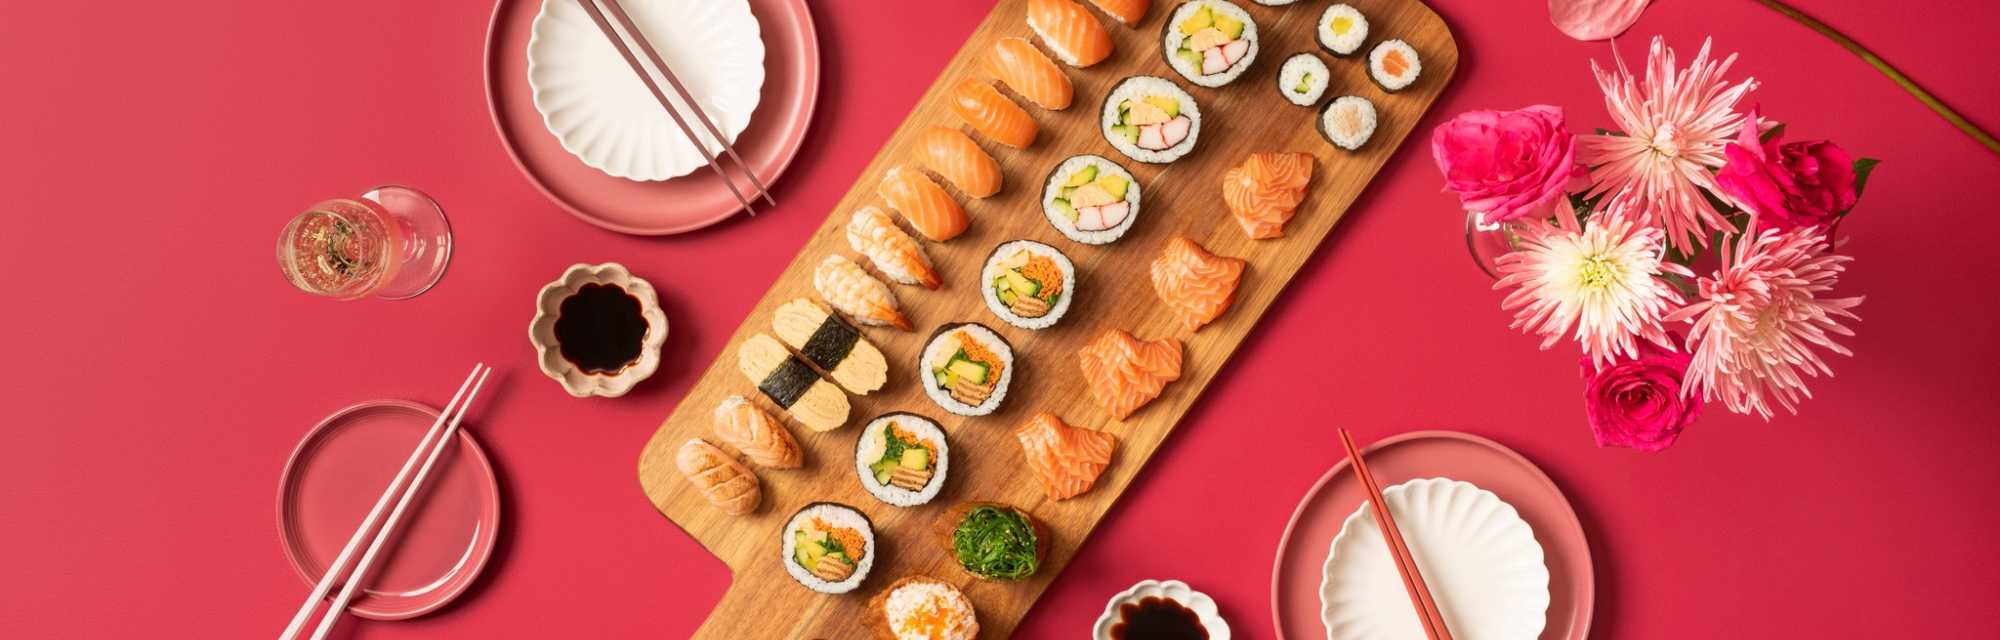 Sushi Sushi Booragoon